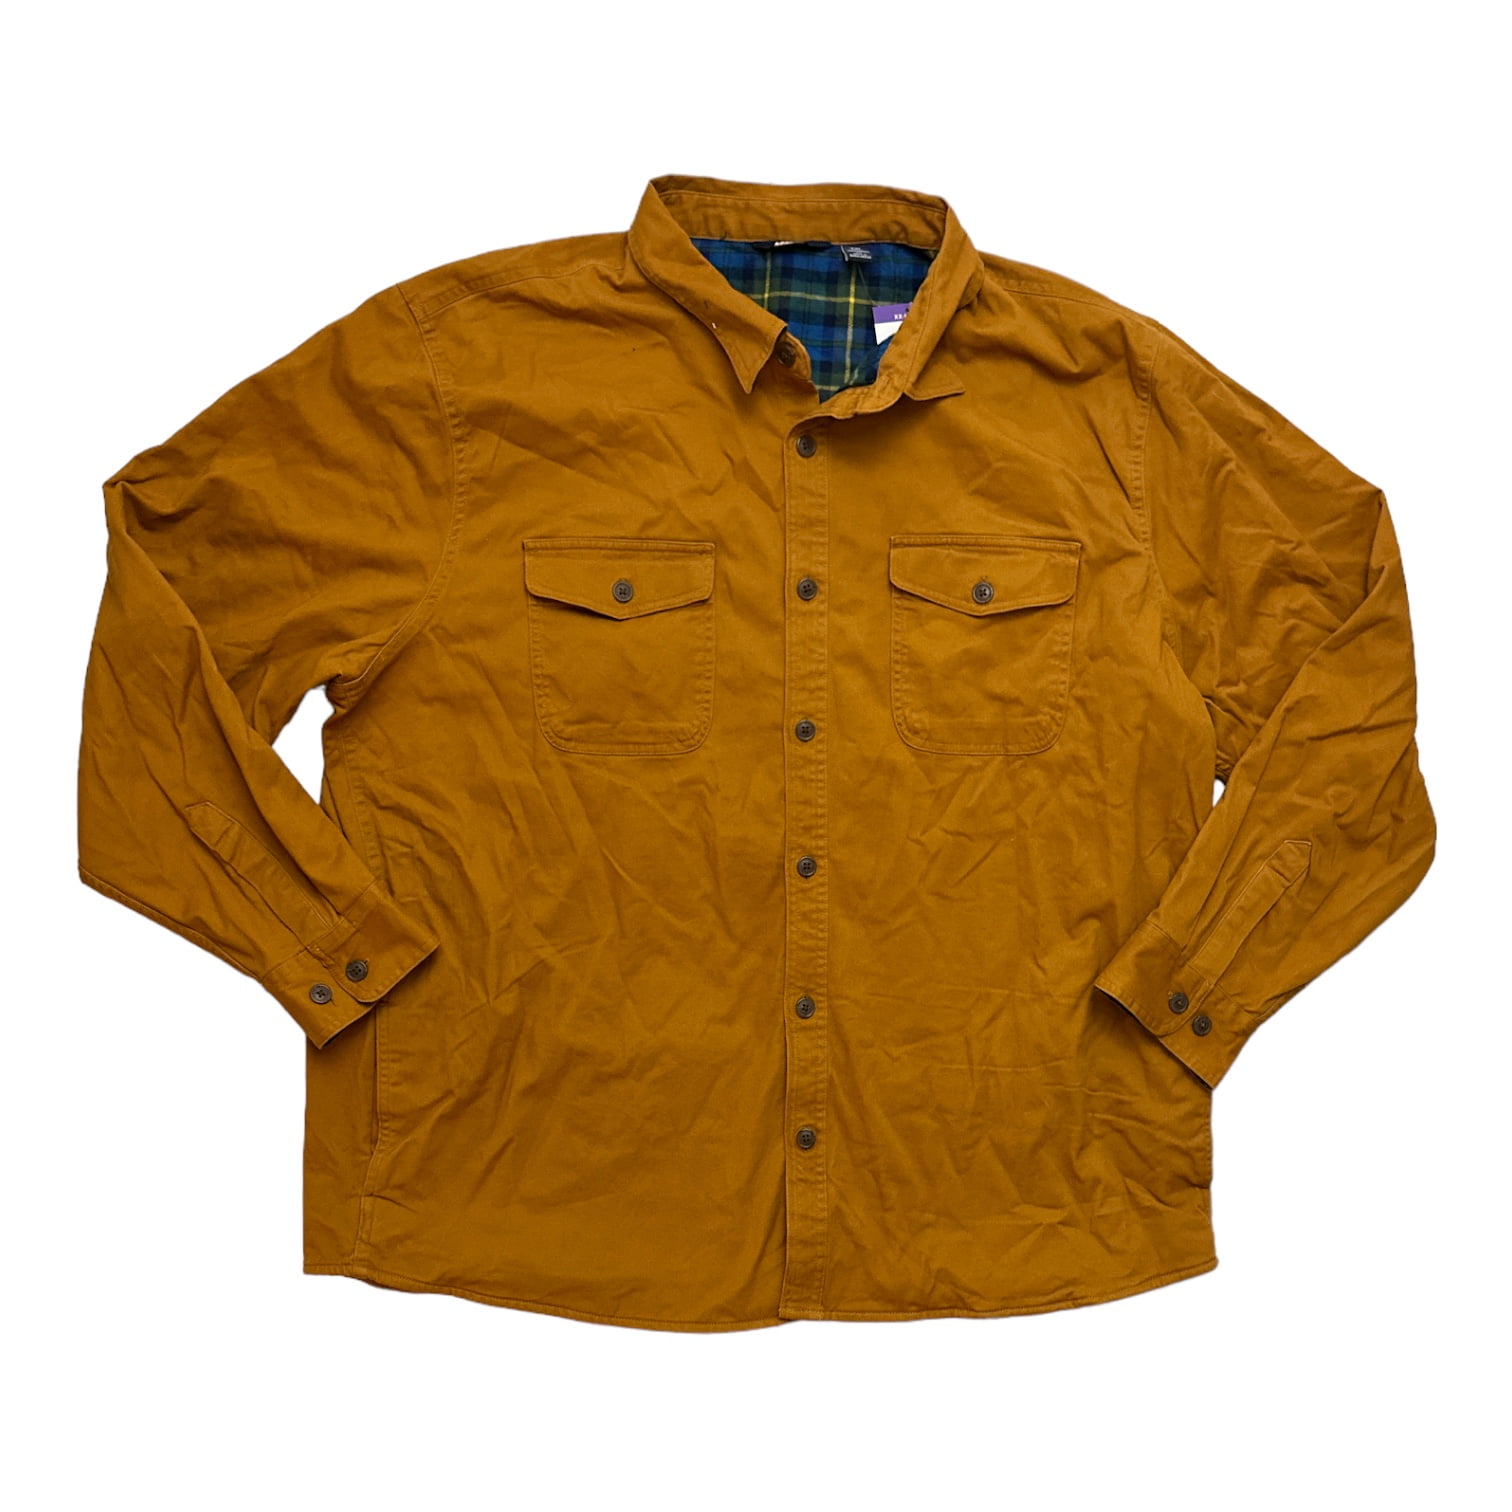 Land's End Men's Flannel Lined Long Sleeve Work Shirt Jacket (Golden Pecan,  M)